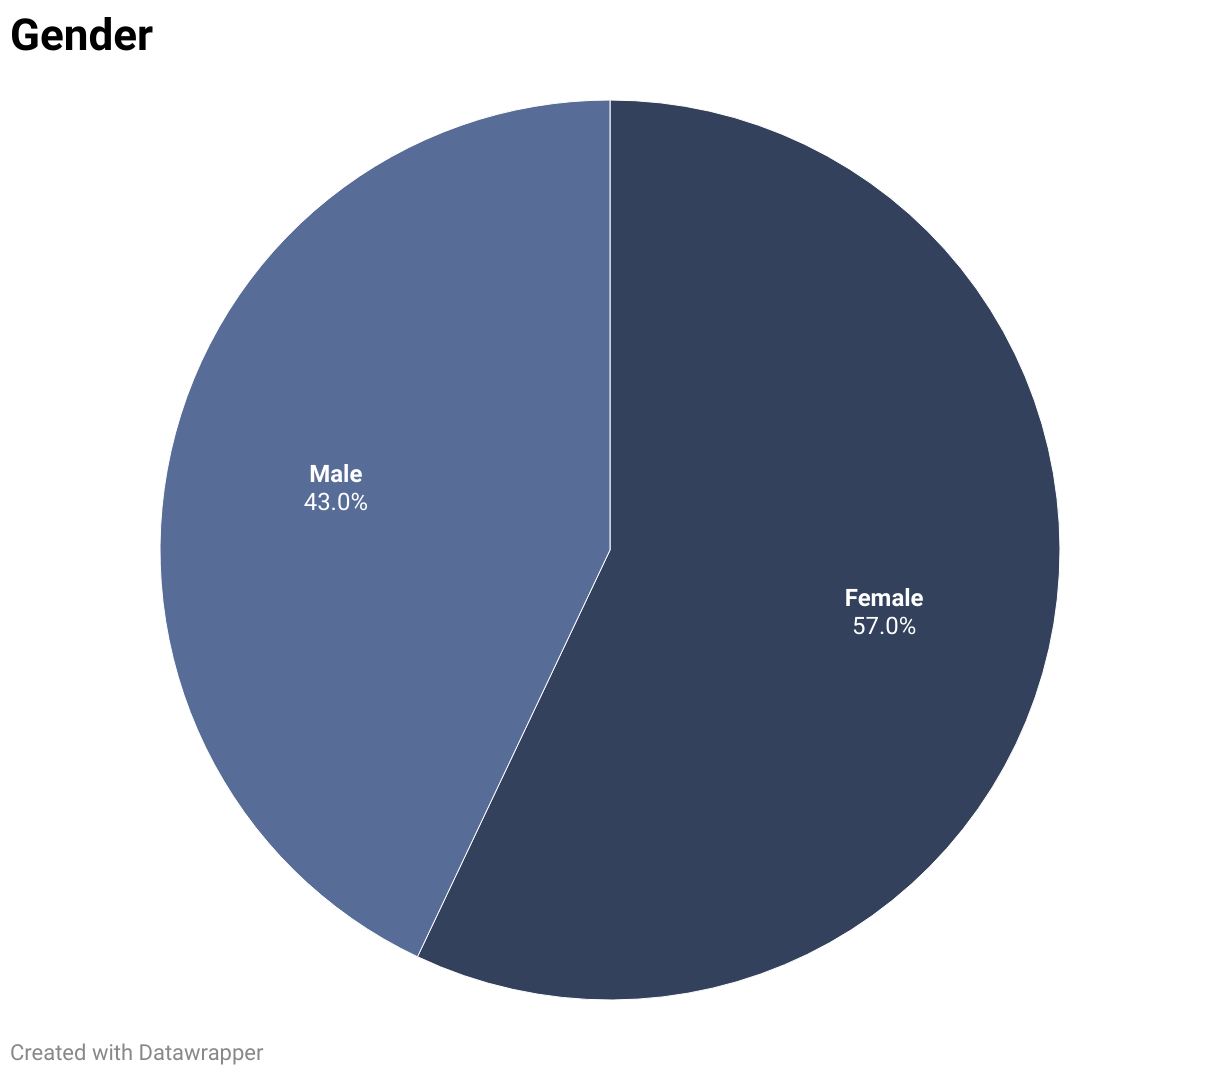 43.0% male, 57.0% female